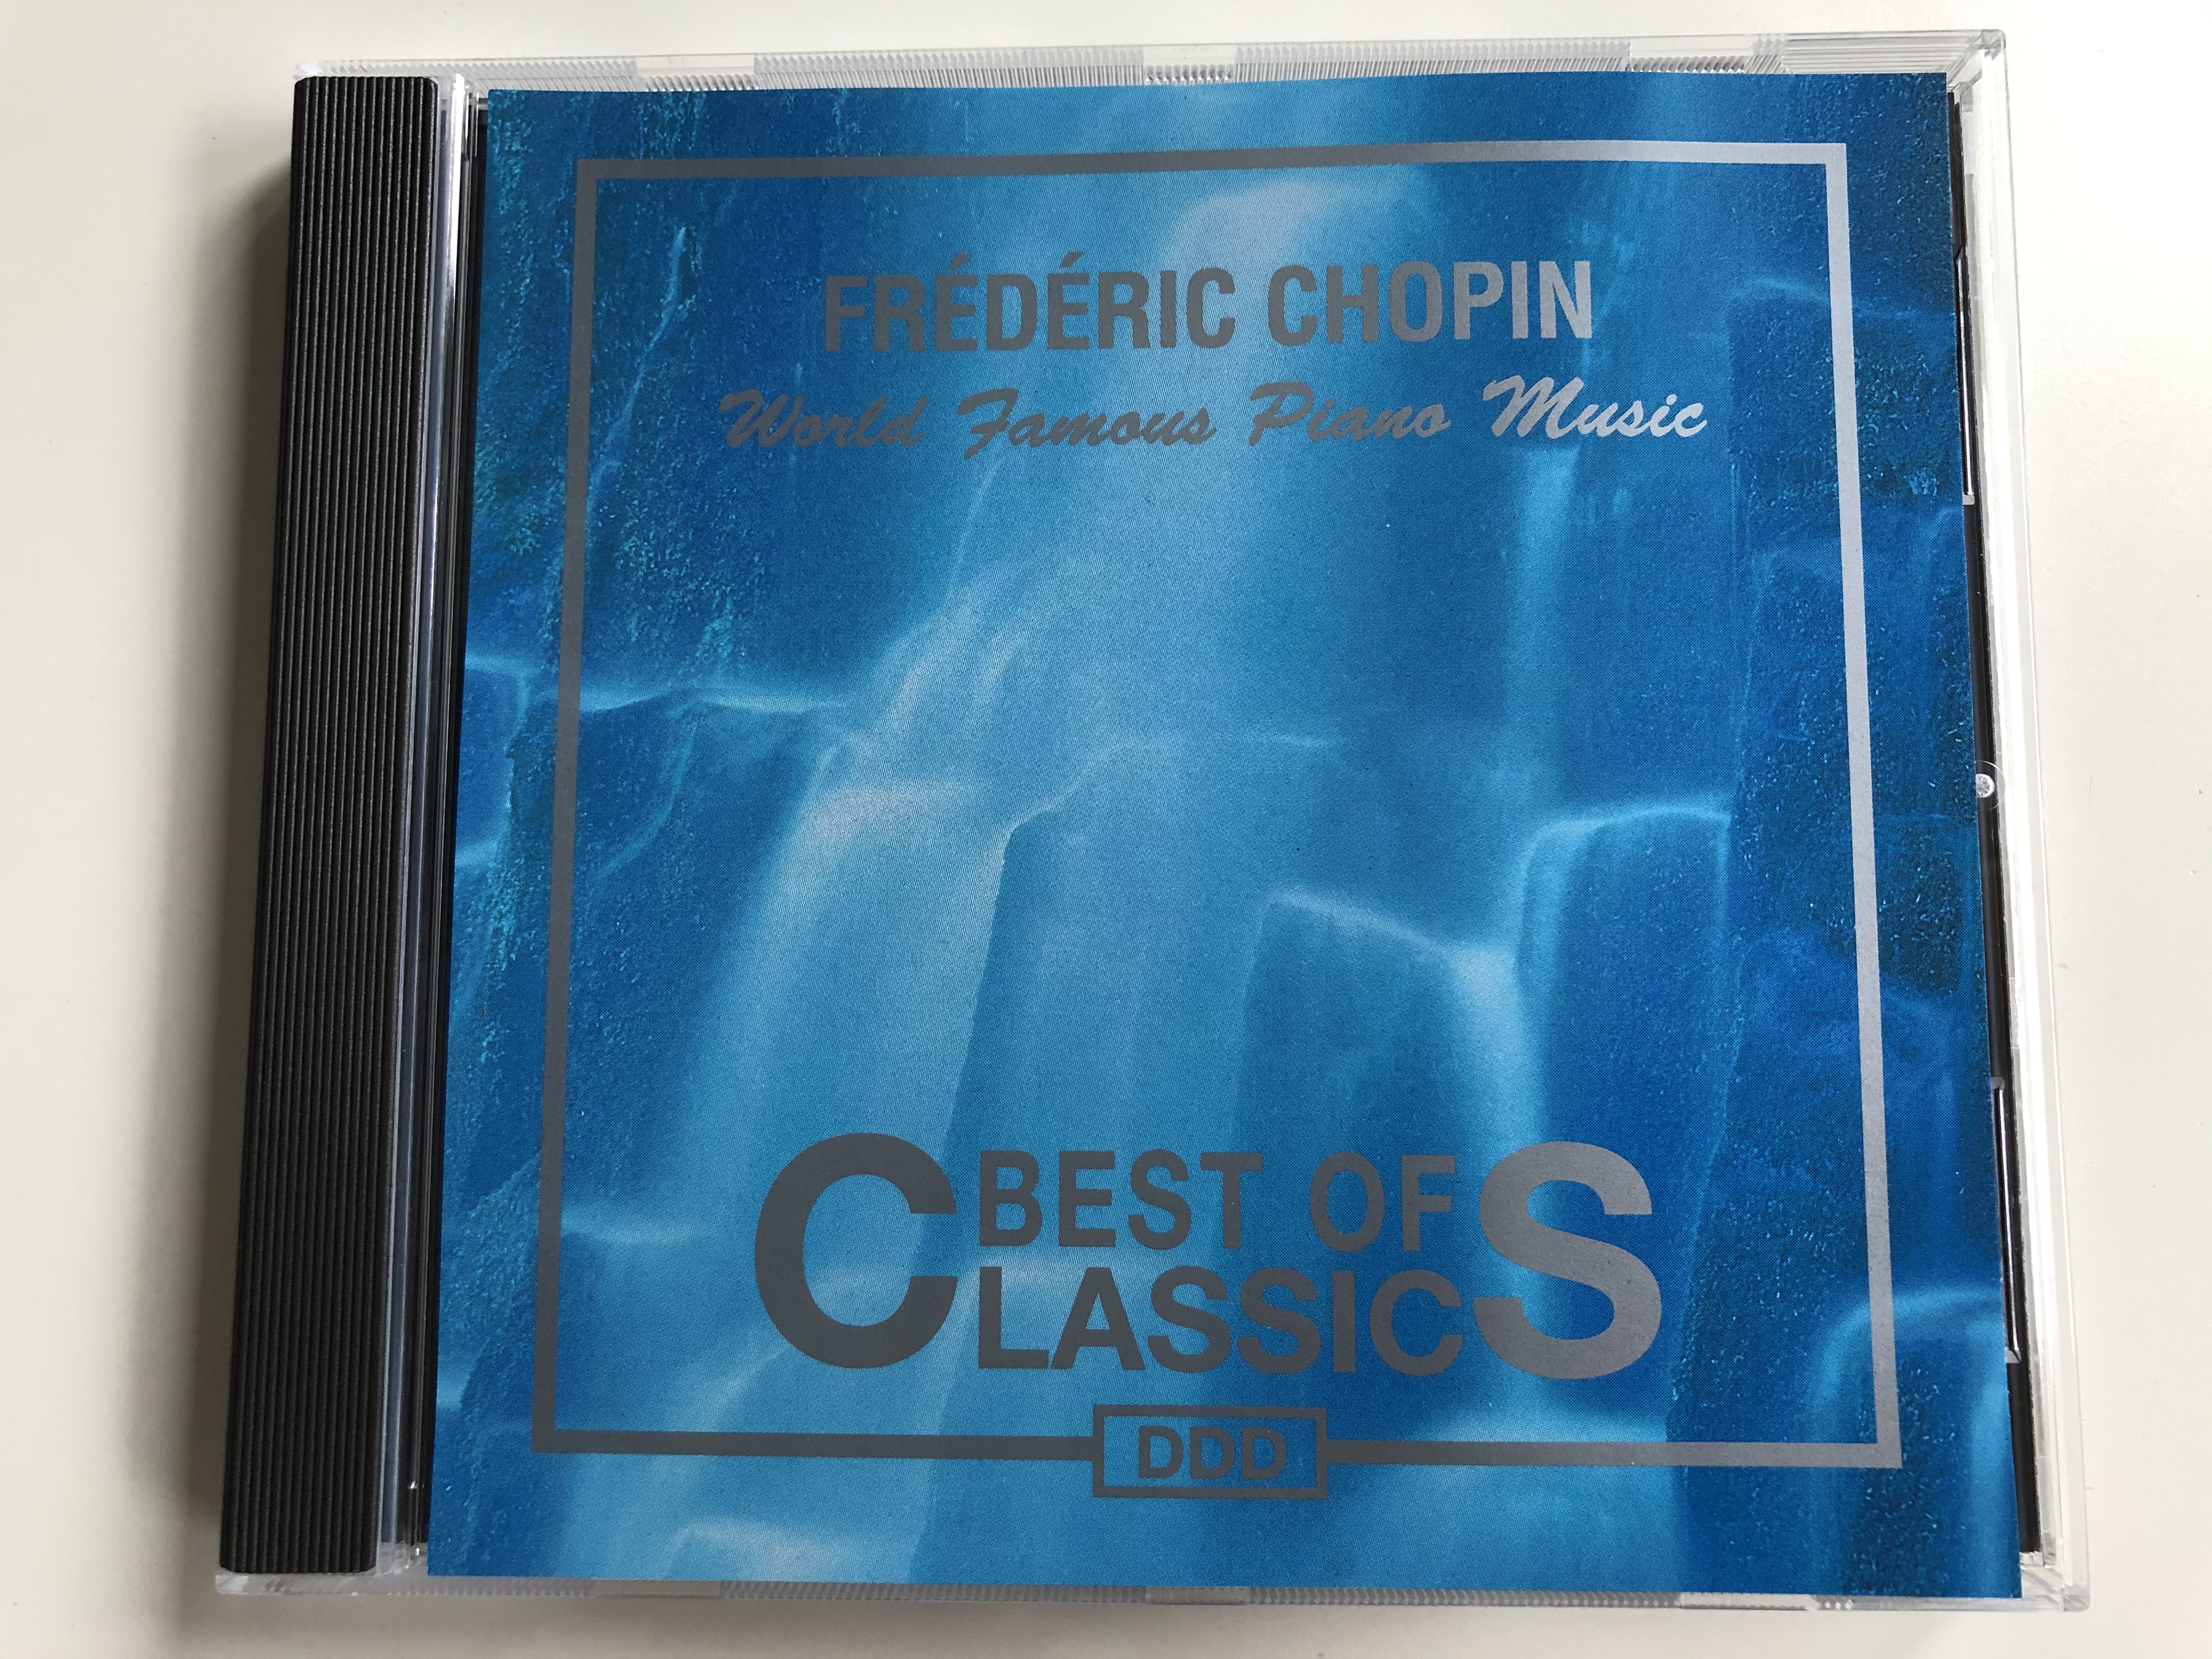 fr-d-ric-chopin-world-famous-piano-music-best-of-classics-pilz-audio-cd-1991-stereo-446926-2-1-.jpg